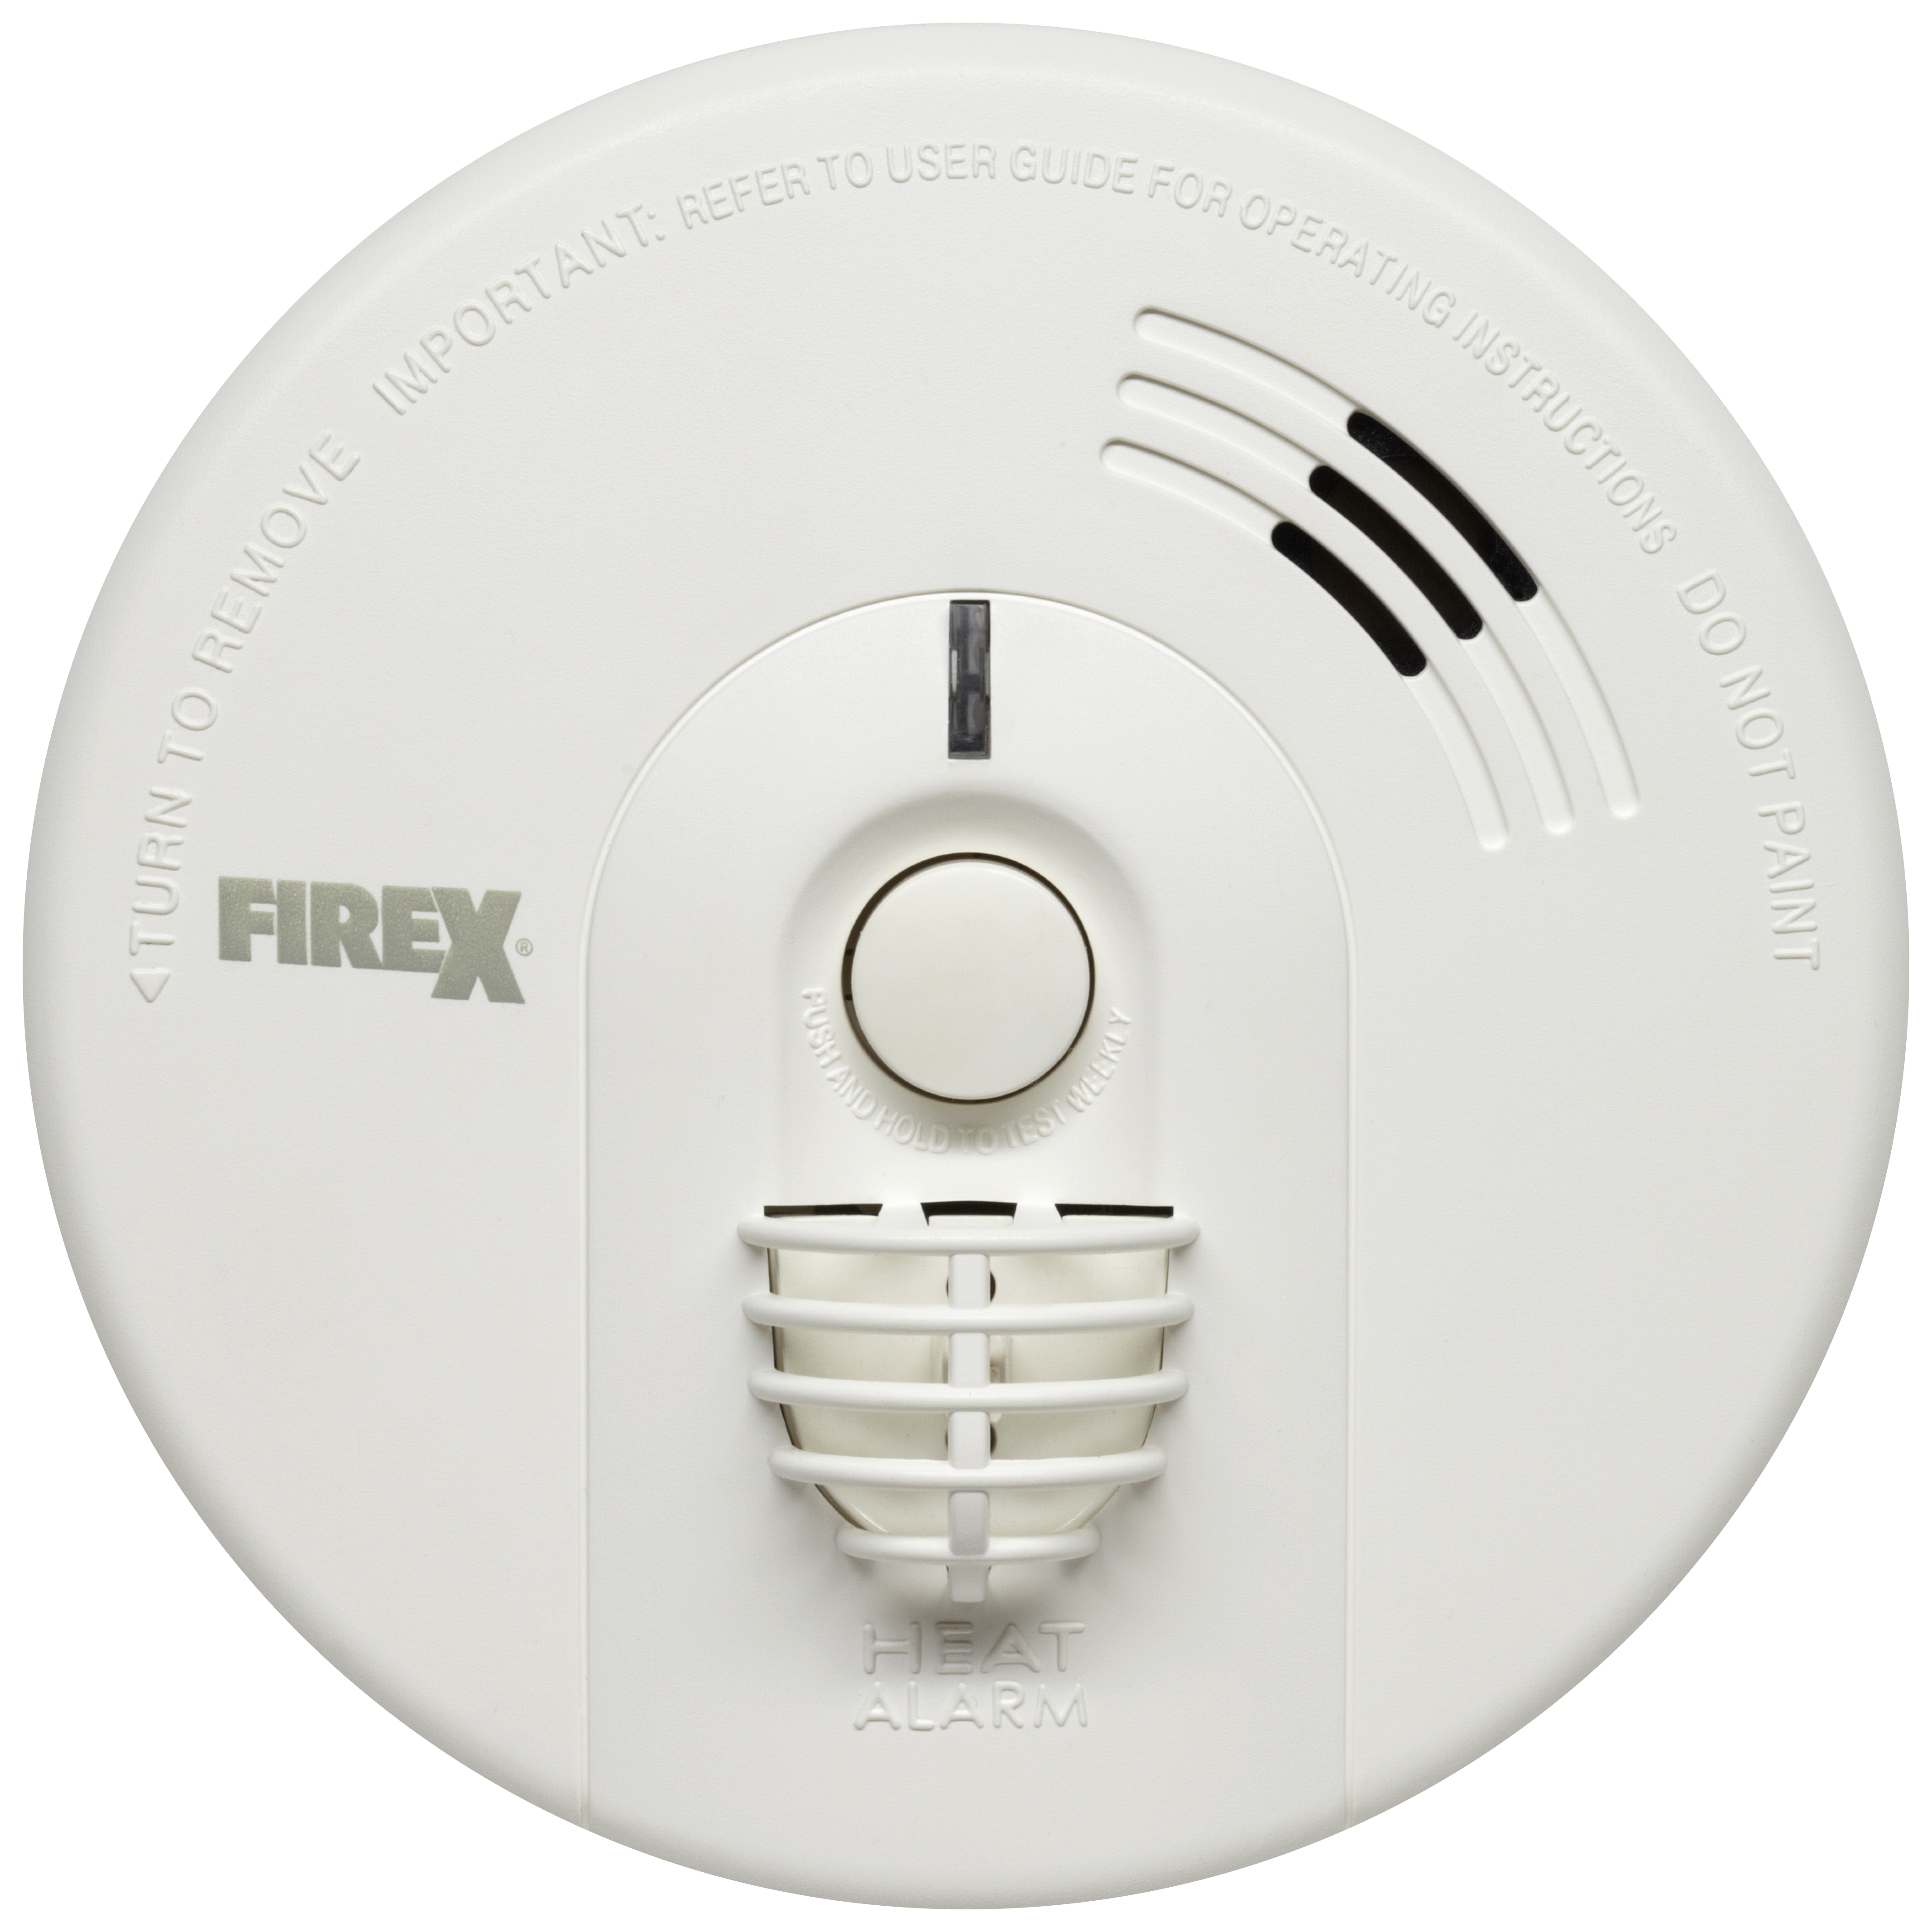 Image of Firex KF30 Interconnectable Heat Alarm